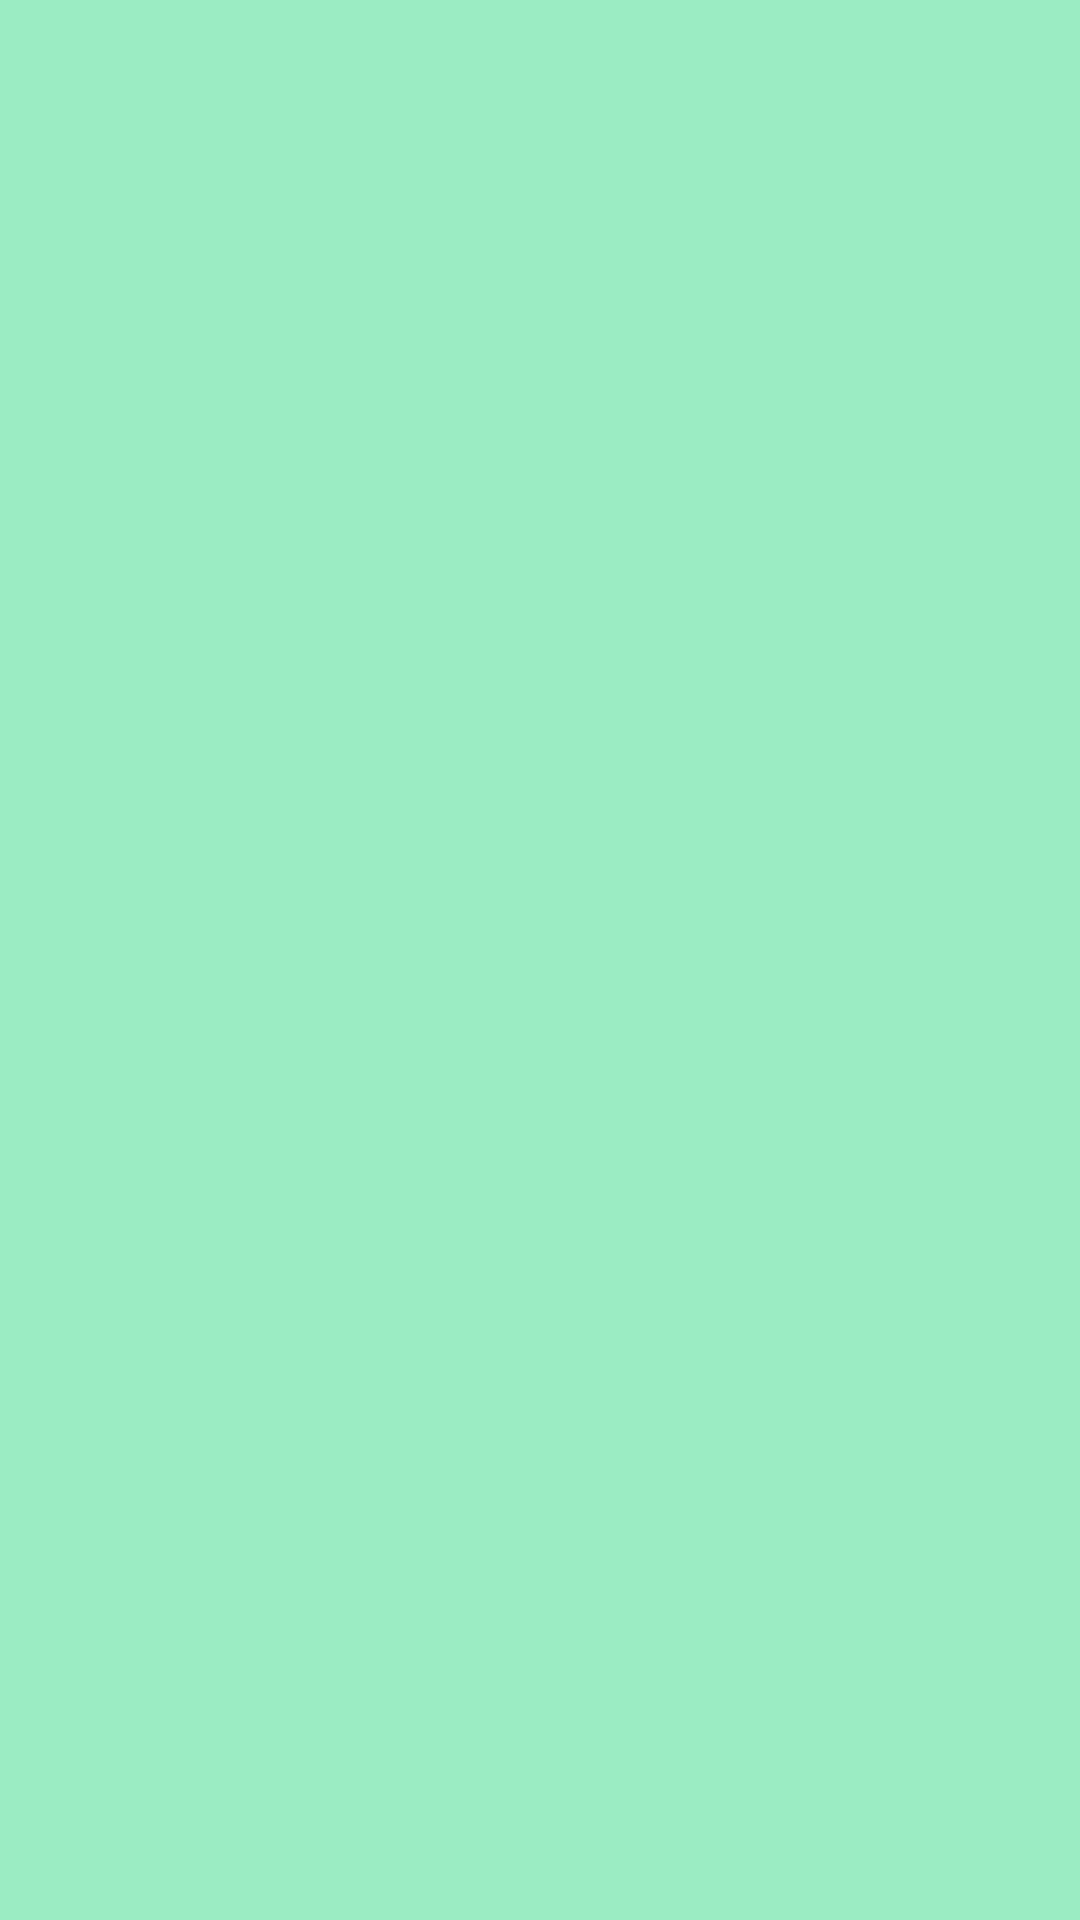 iphone mint green wallpaper